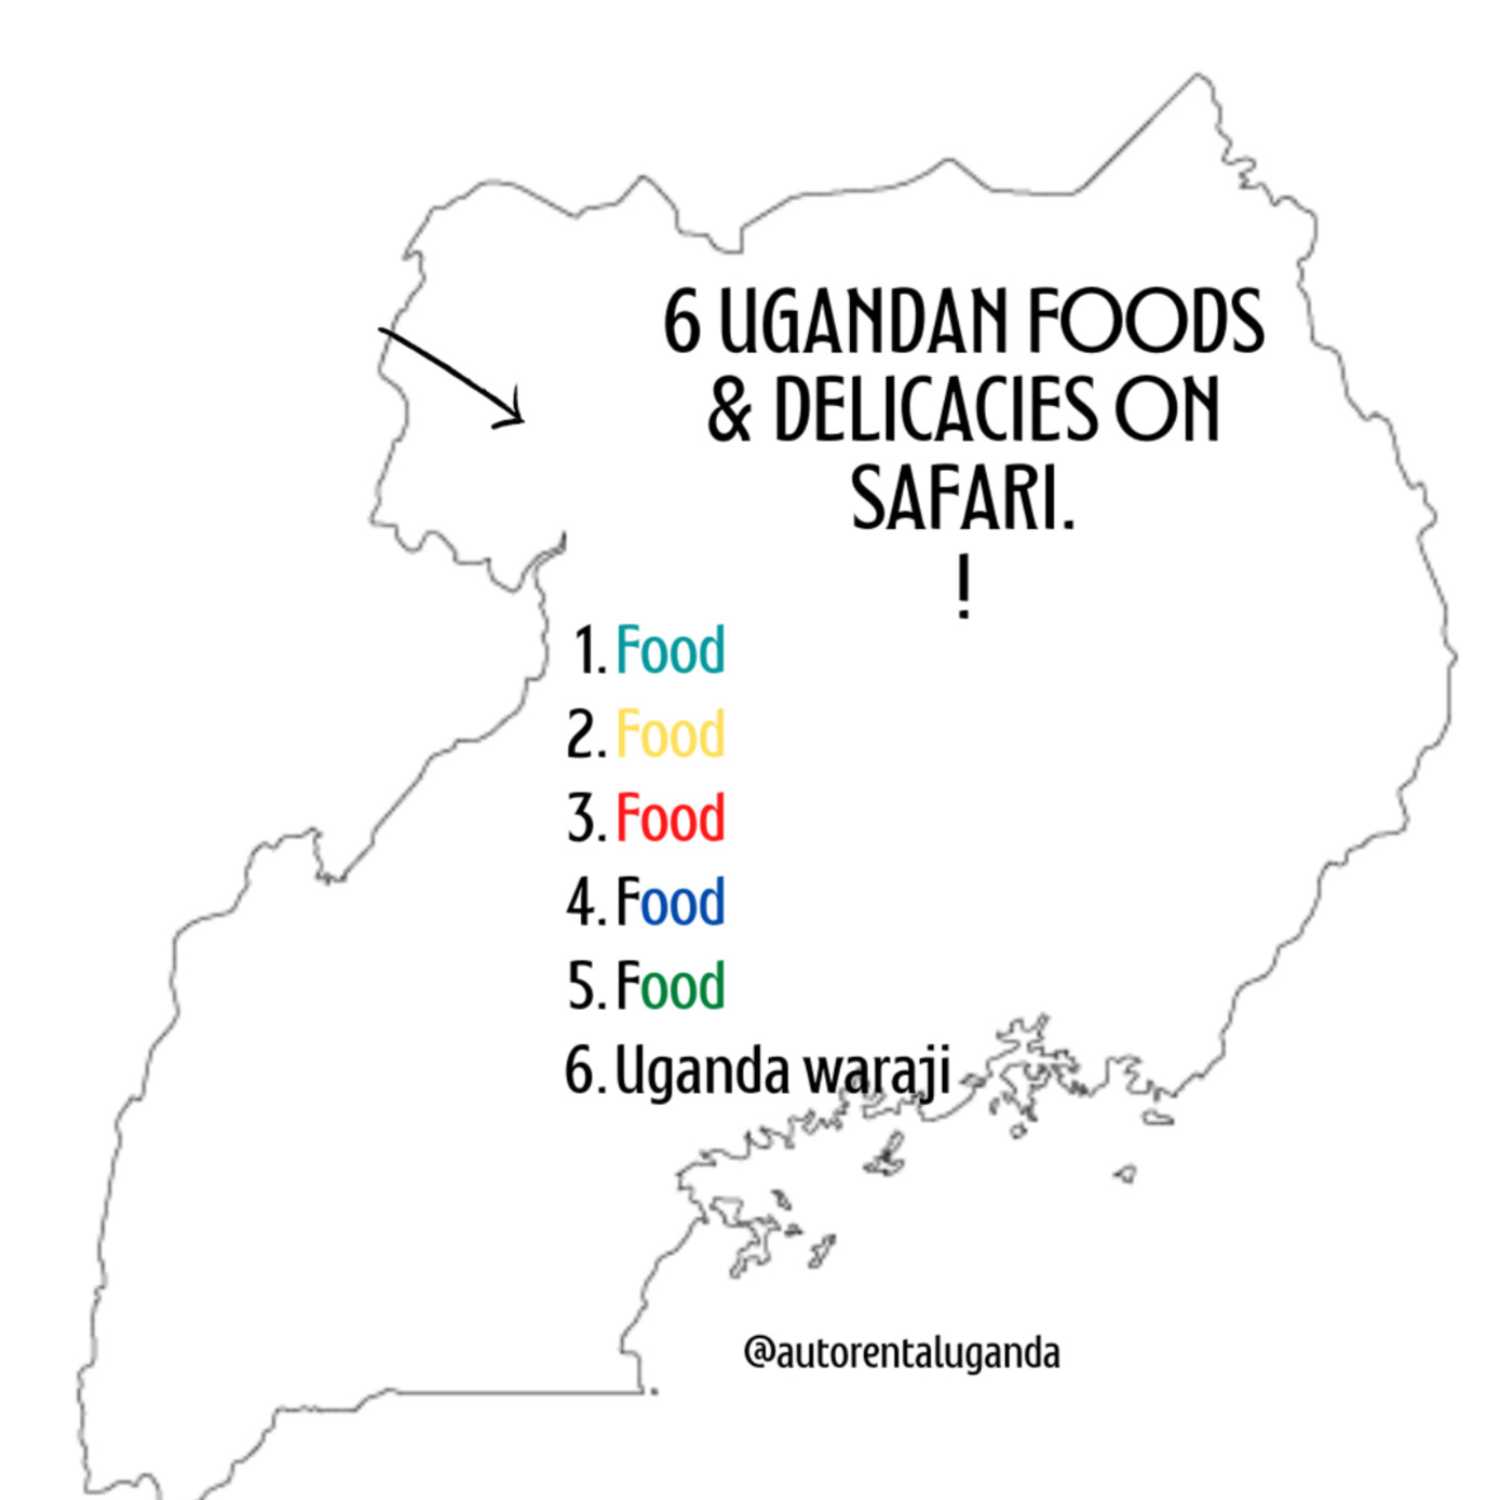 6 foods and delicacies on uganda safari.